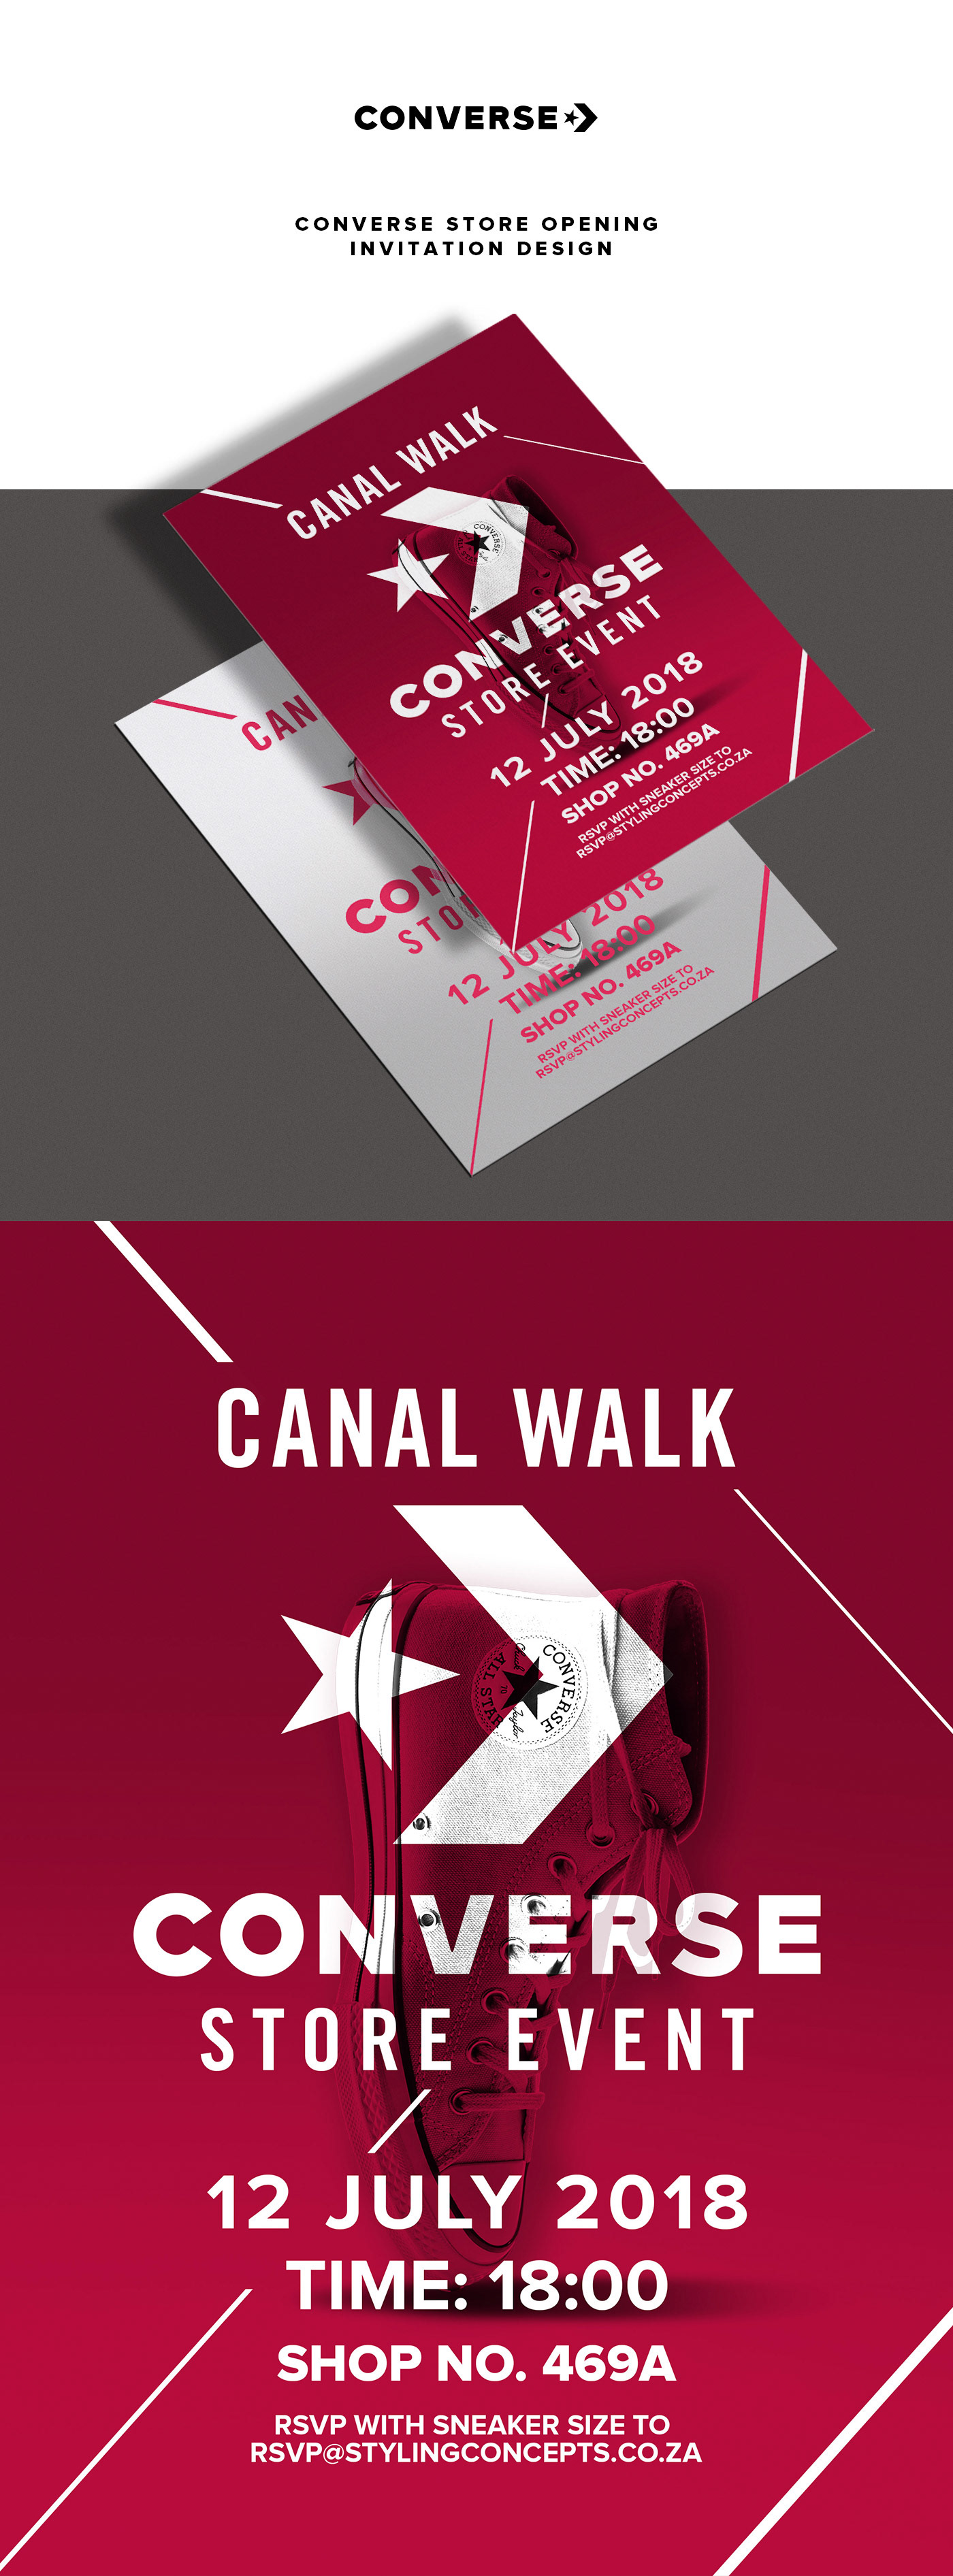 converse store canal walk